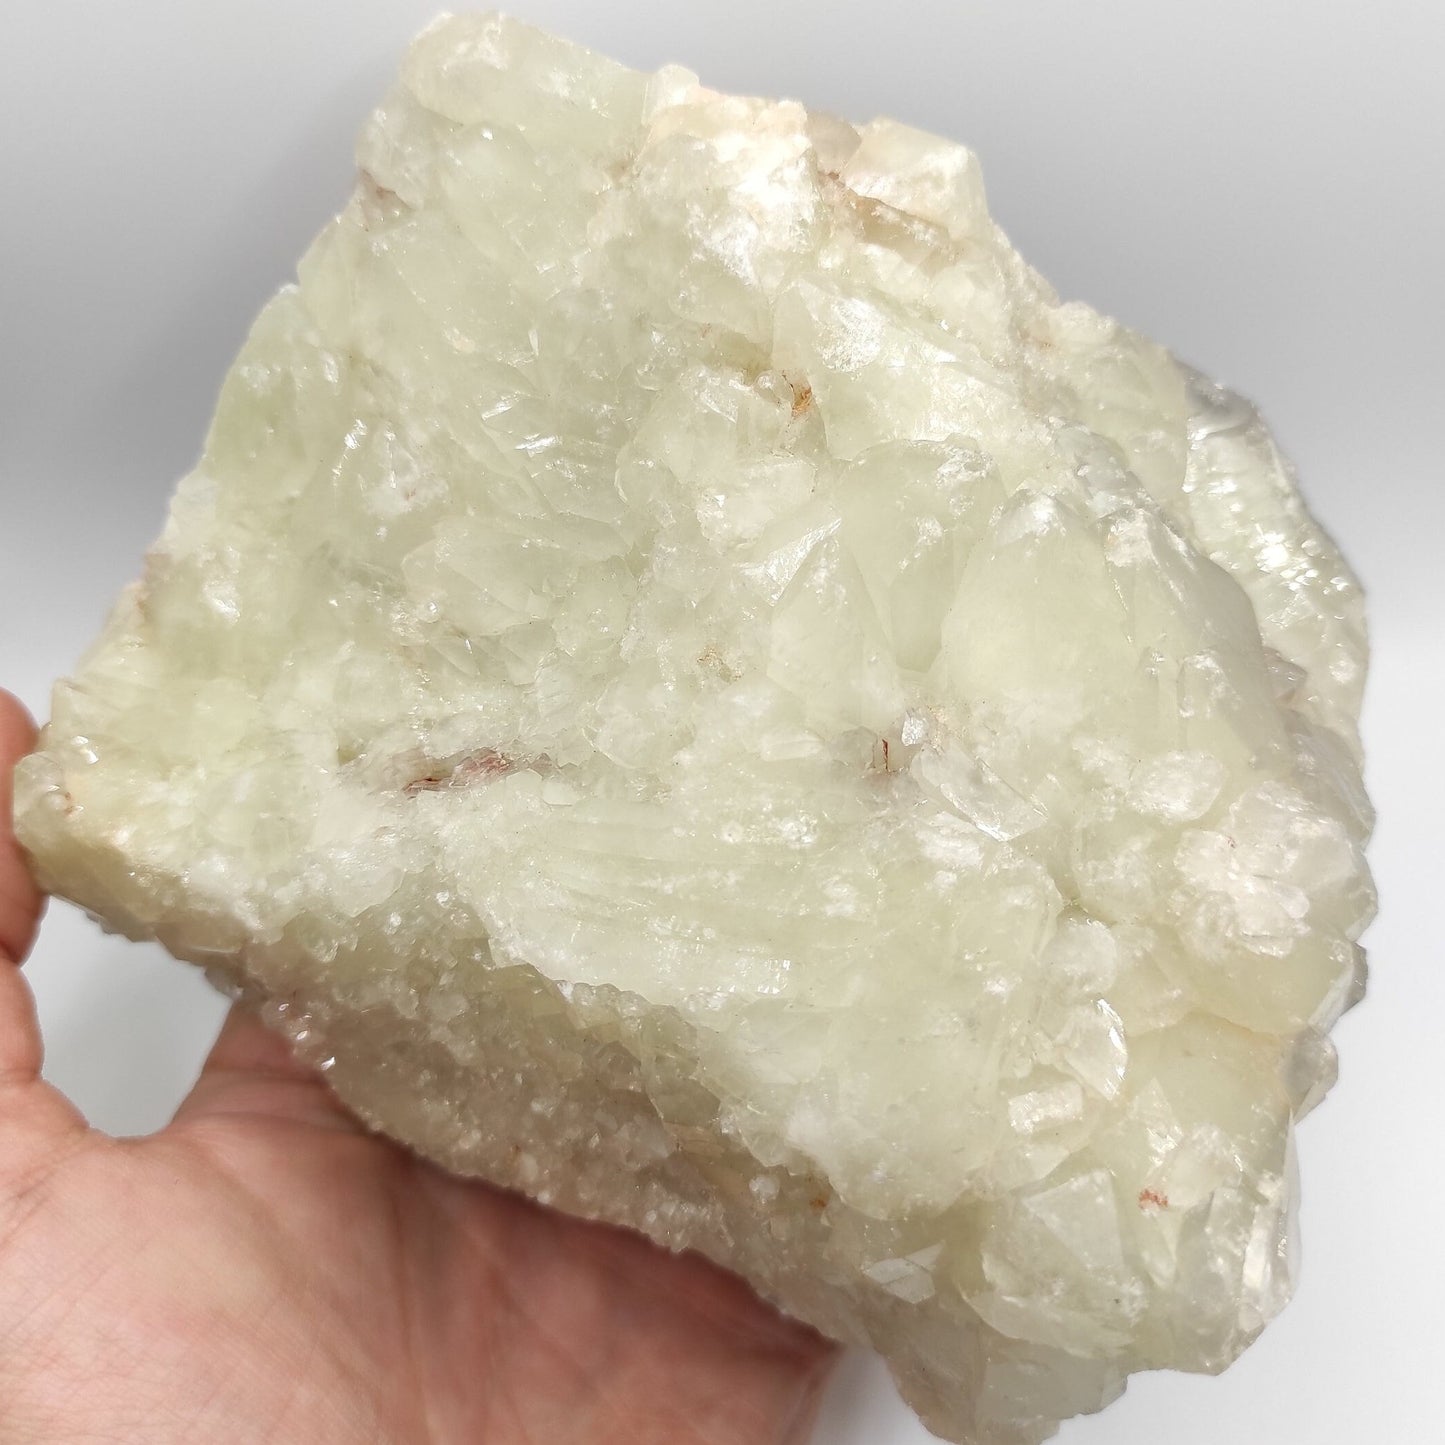 1.86 kg HUGE Sulphur Lemon Quartz Cluster Raw NATURAL Lemon Quartz Brazil Minas Gerais Crystal Specimen Large Rare Sulfur Quartz Specimen